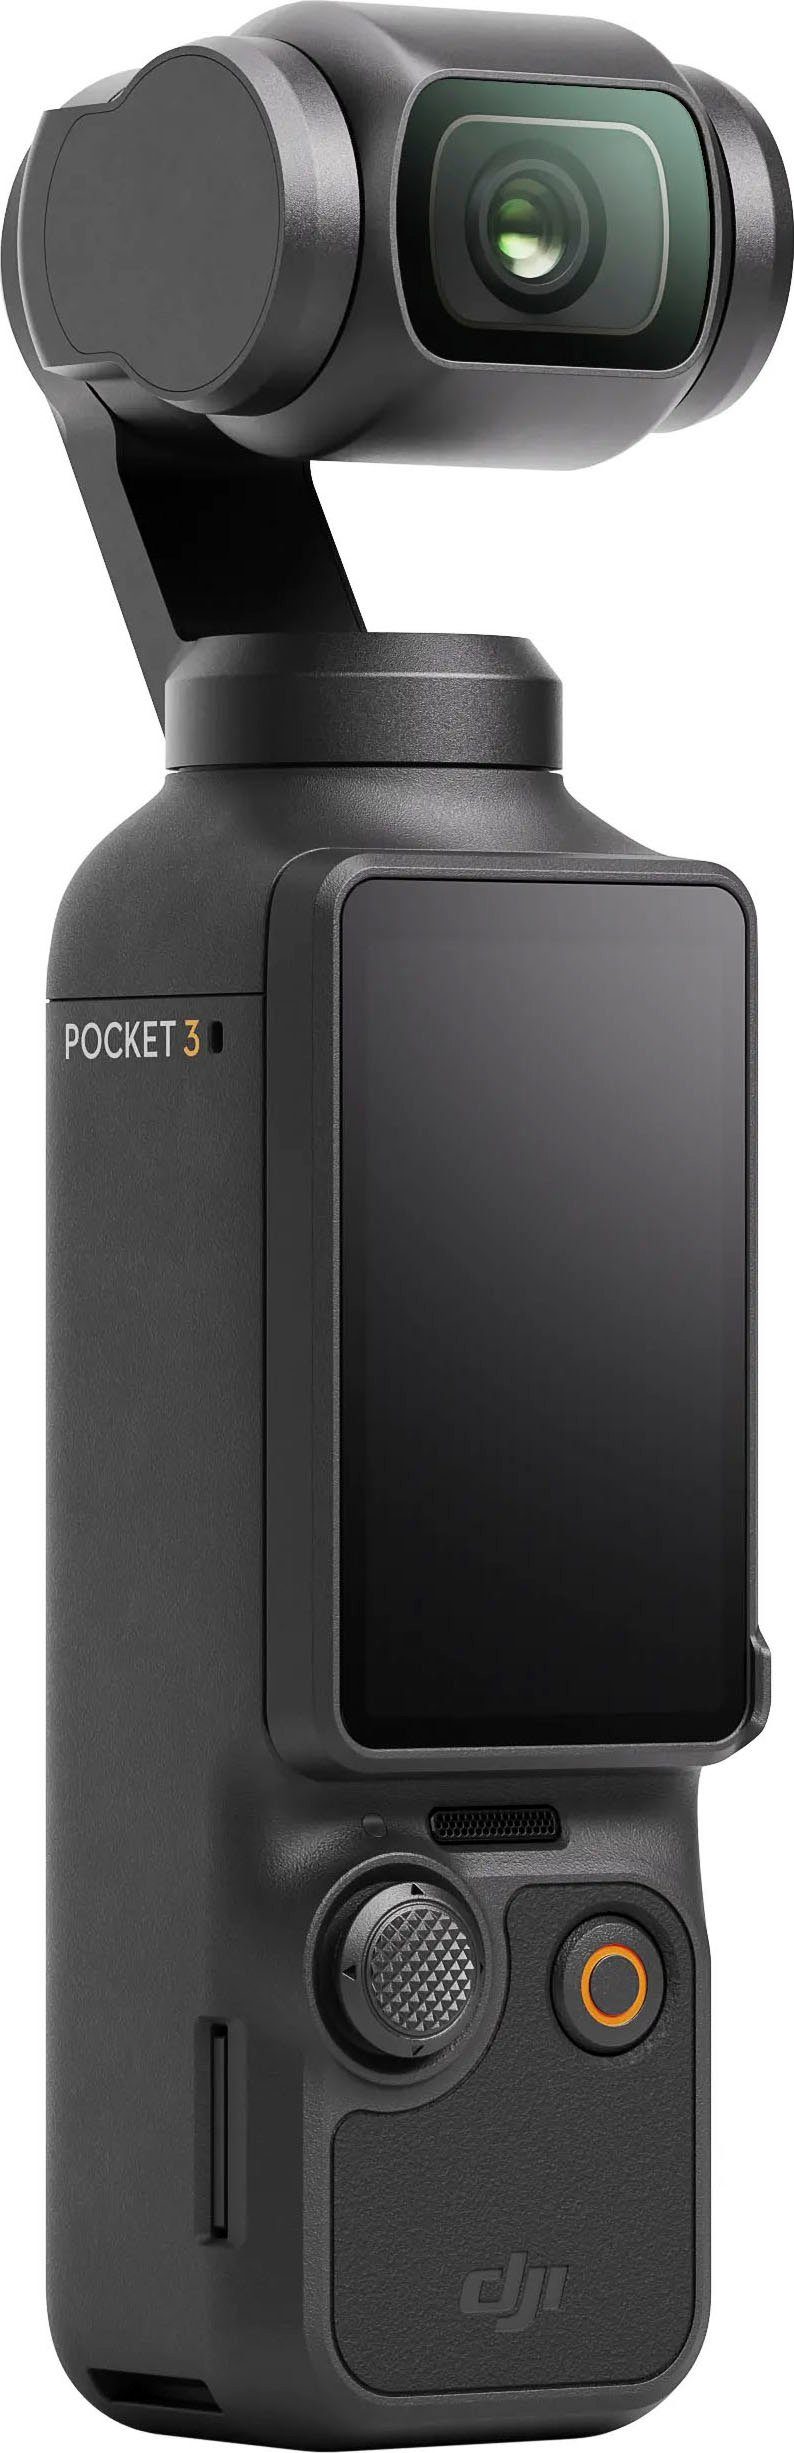 3 Osmo HD, Pocket DJI Bluetooth) (4K Camcorder Ultra